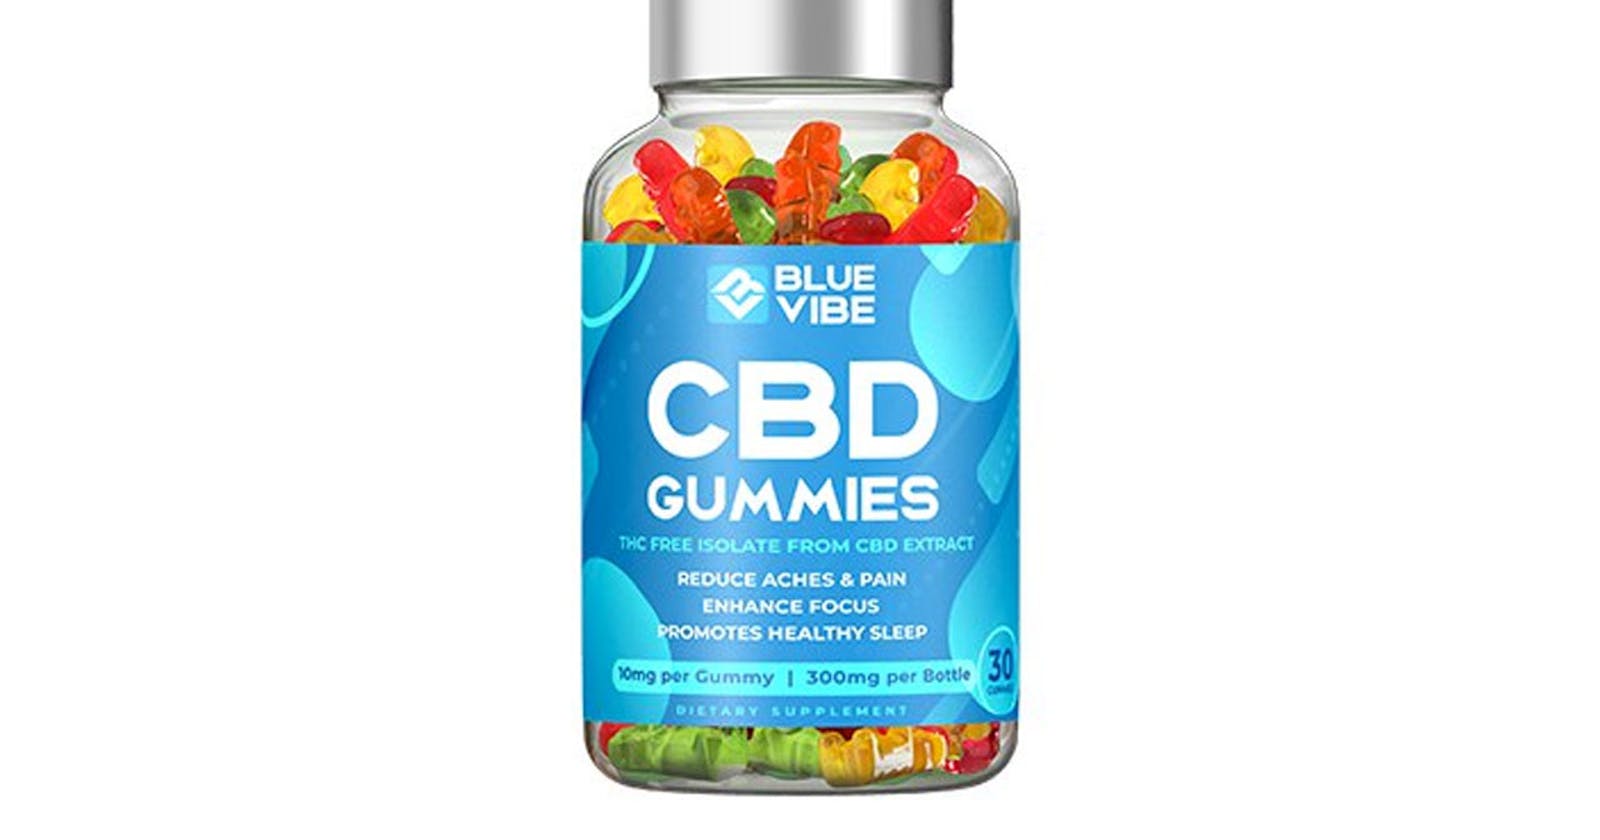 Blue Vibe CBD Gummies Scam